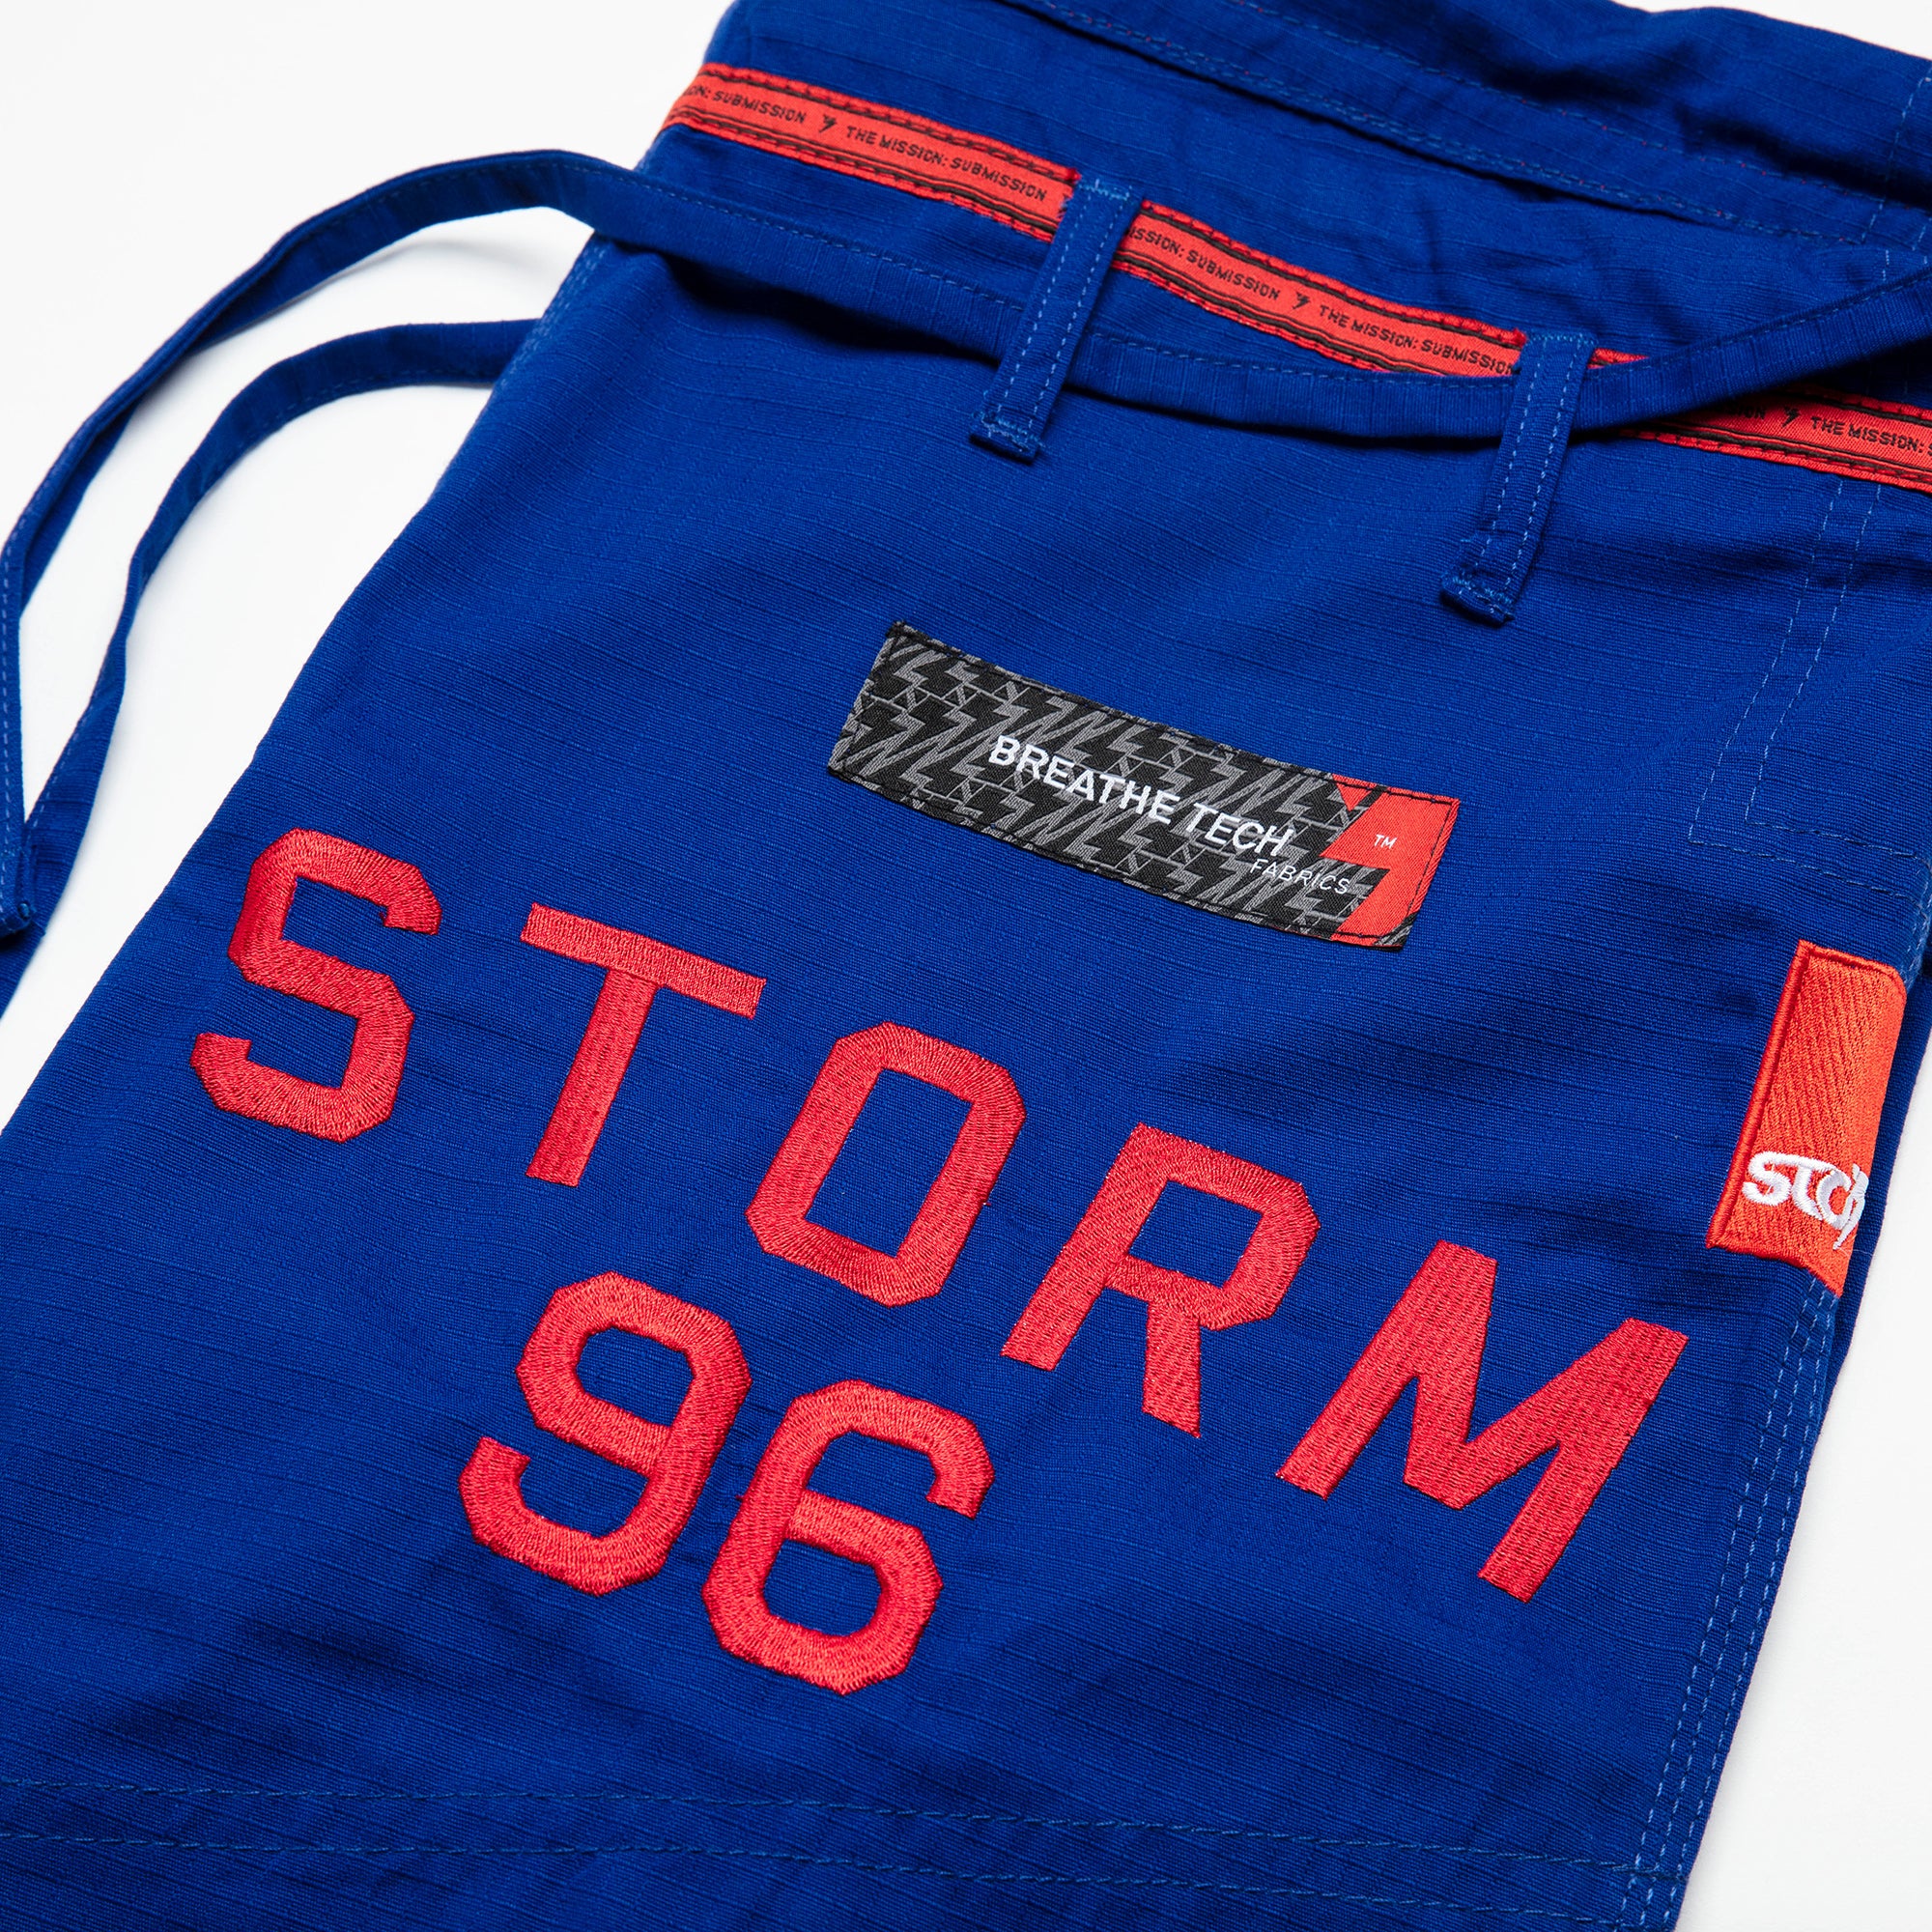 Storm Kimonos T3 Sub96' Gi - Blue - Storm Kimonos New